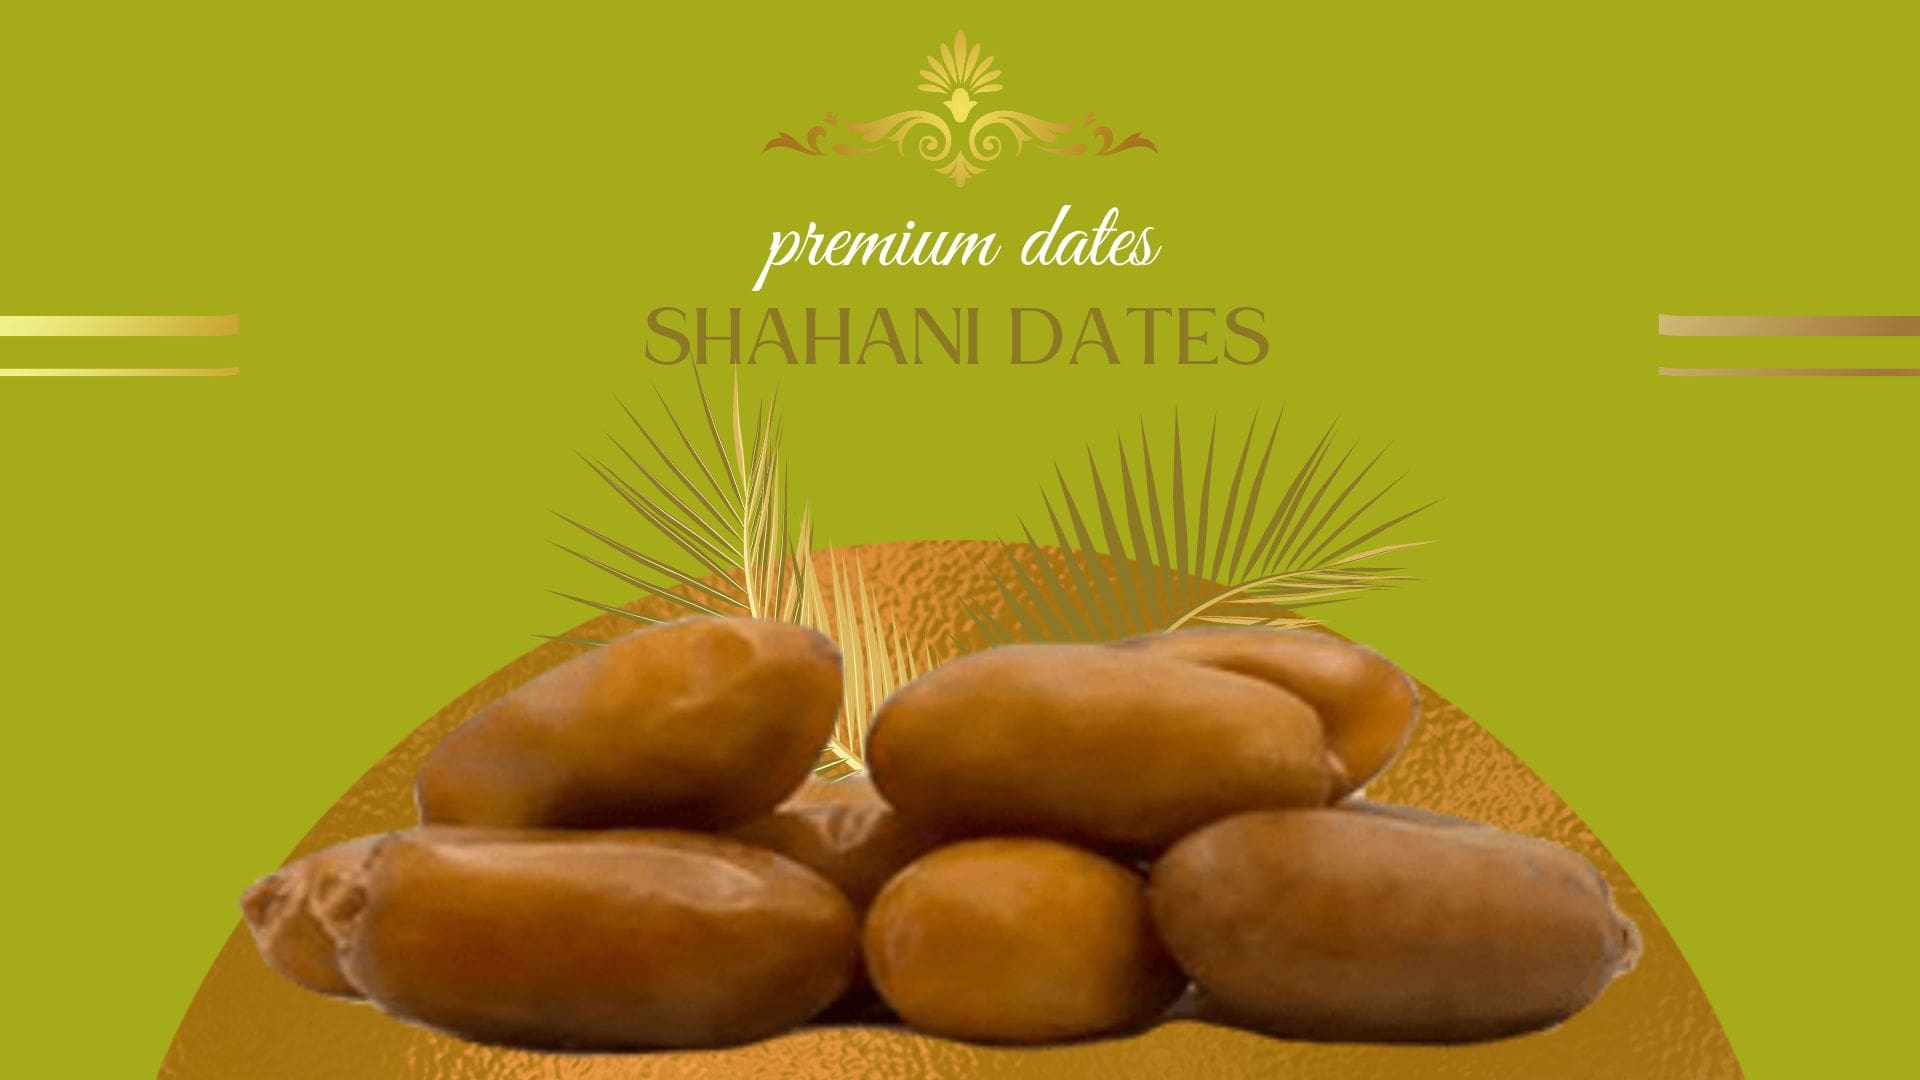 shahani dates 